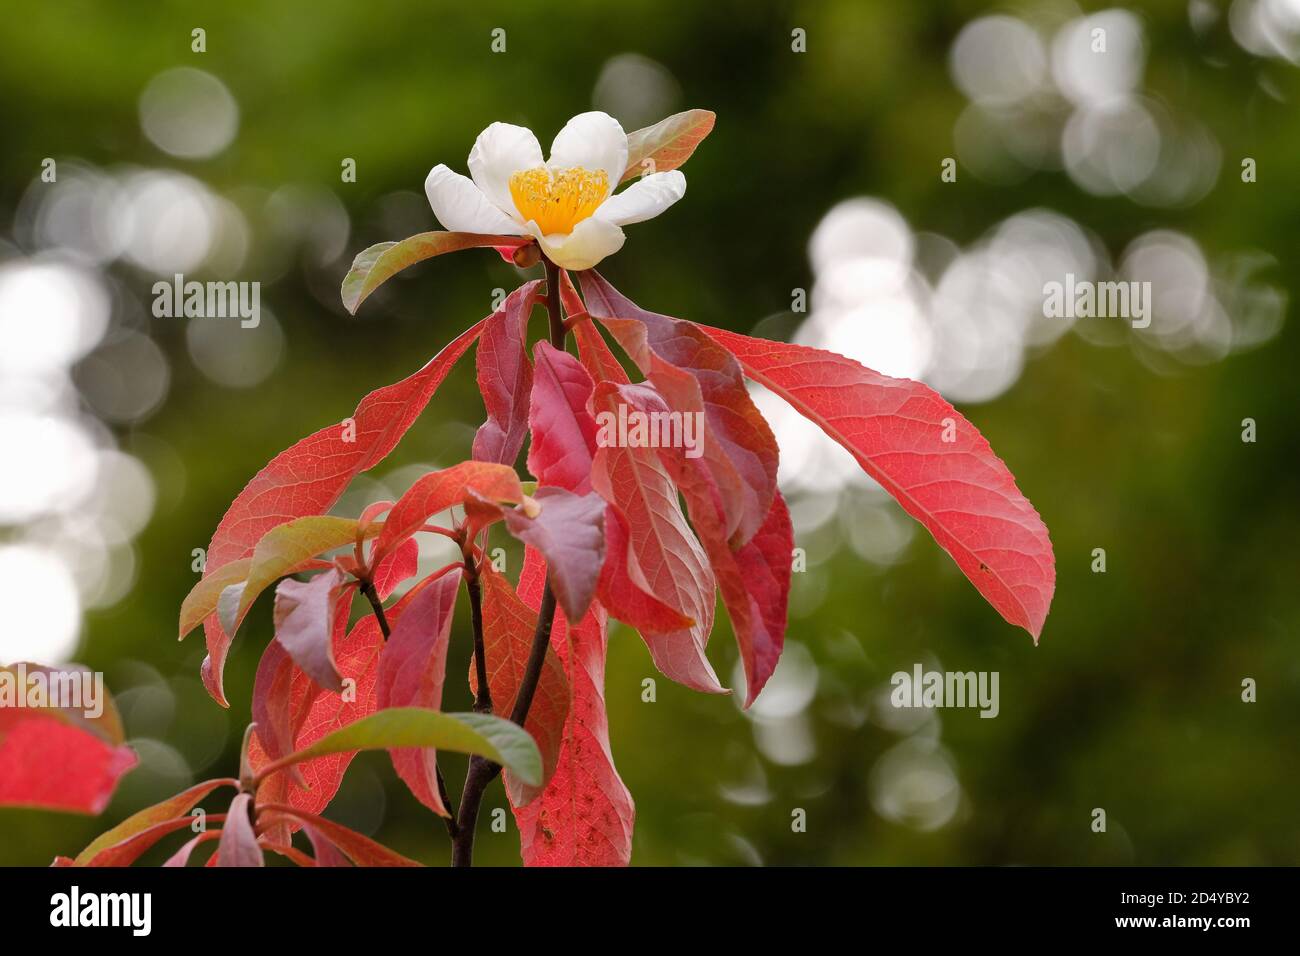 Franklinia alatamaha, Franklin tree also known as Gordonia alatamaha, Gordonia pubescens. Single white flower, red leaves, blurred background Stock Photo